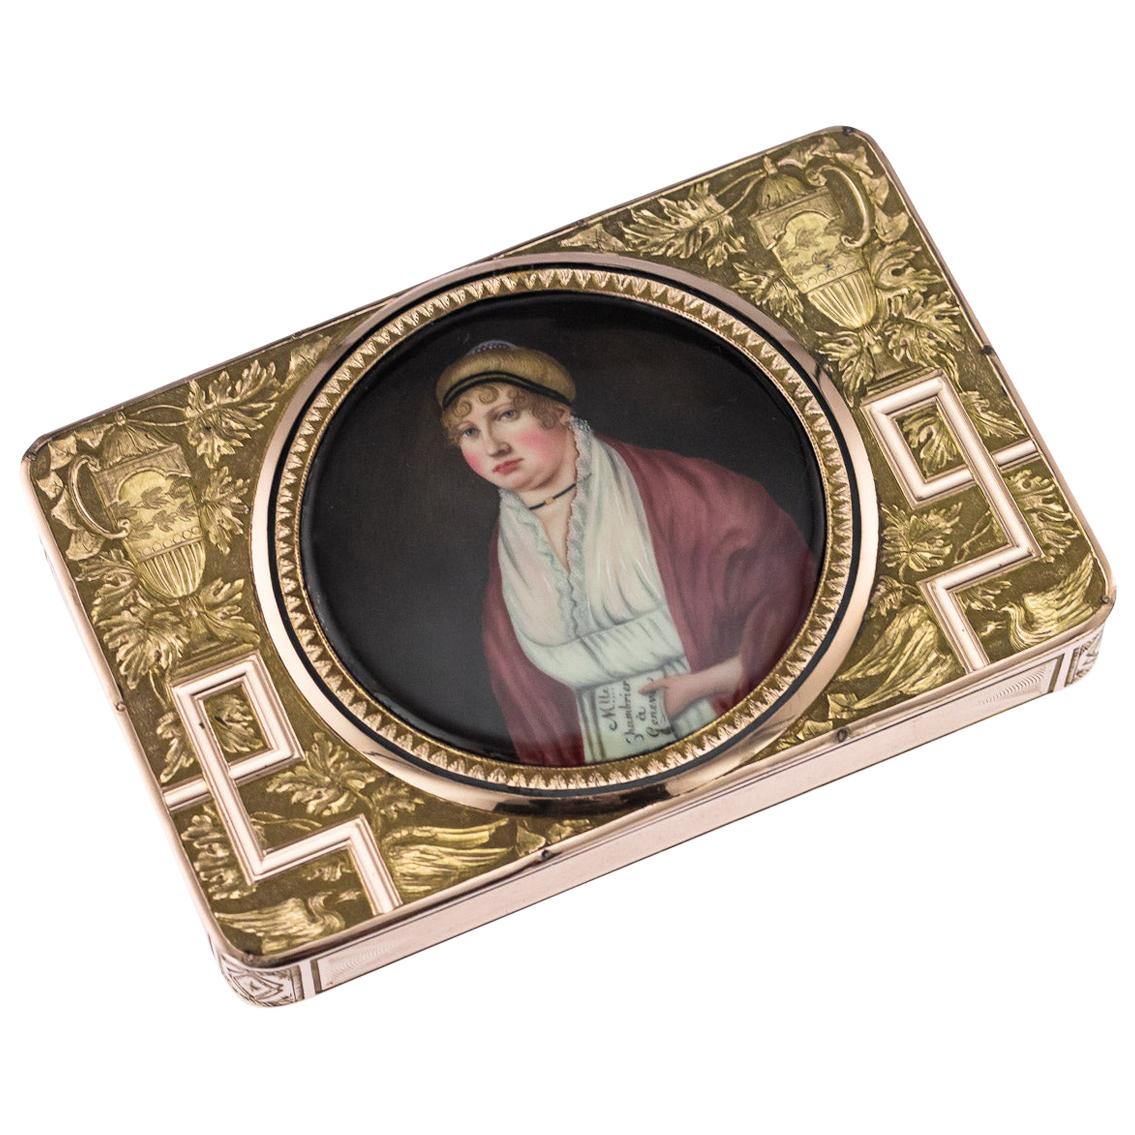 19th Century Swiss 18 Karat Gold and Enamel Snuff Box with Miniature, circa 1810